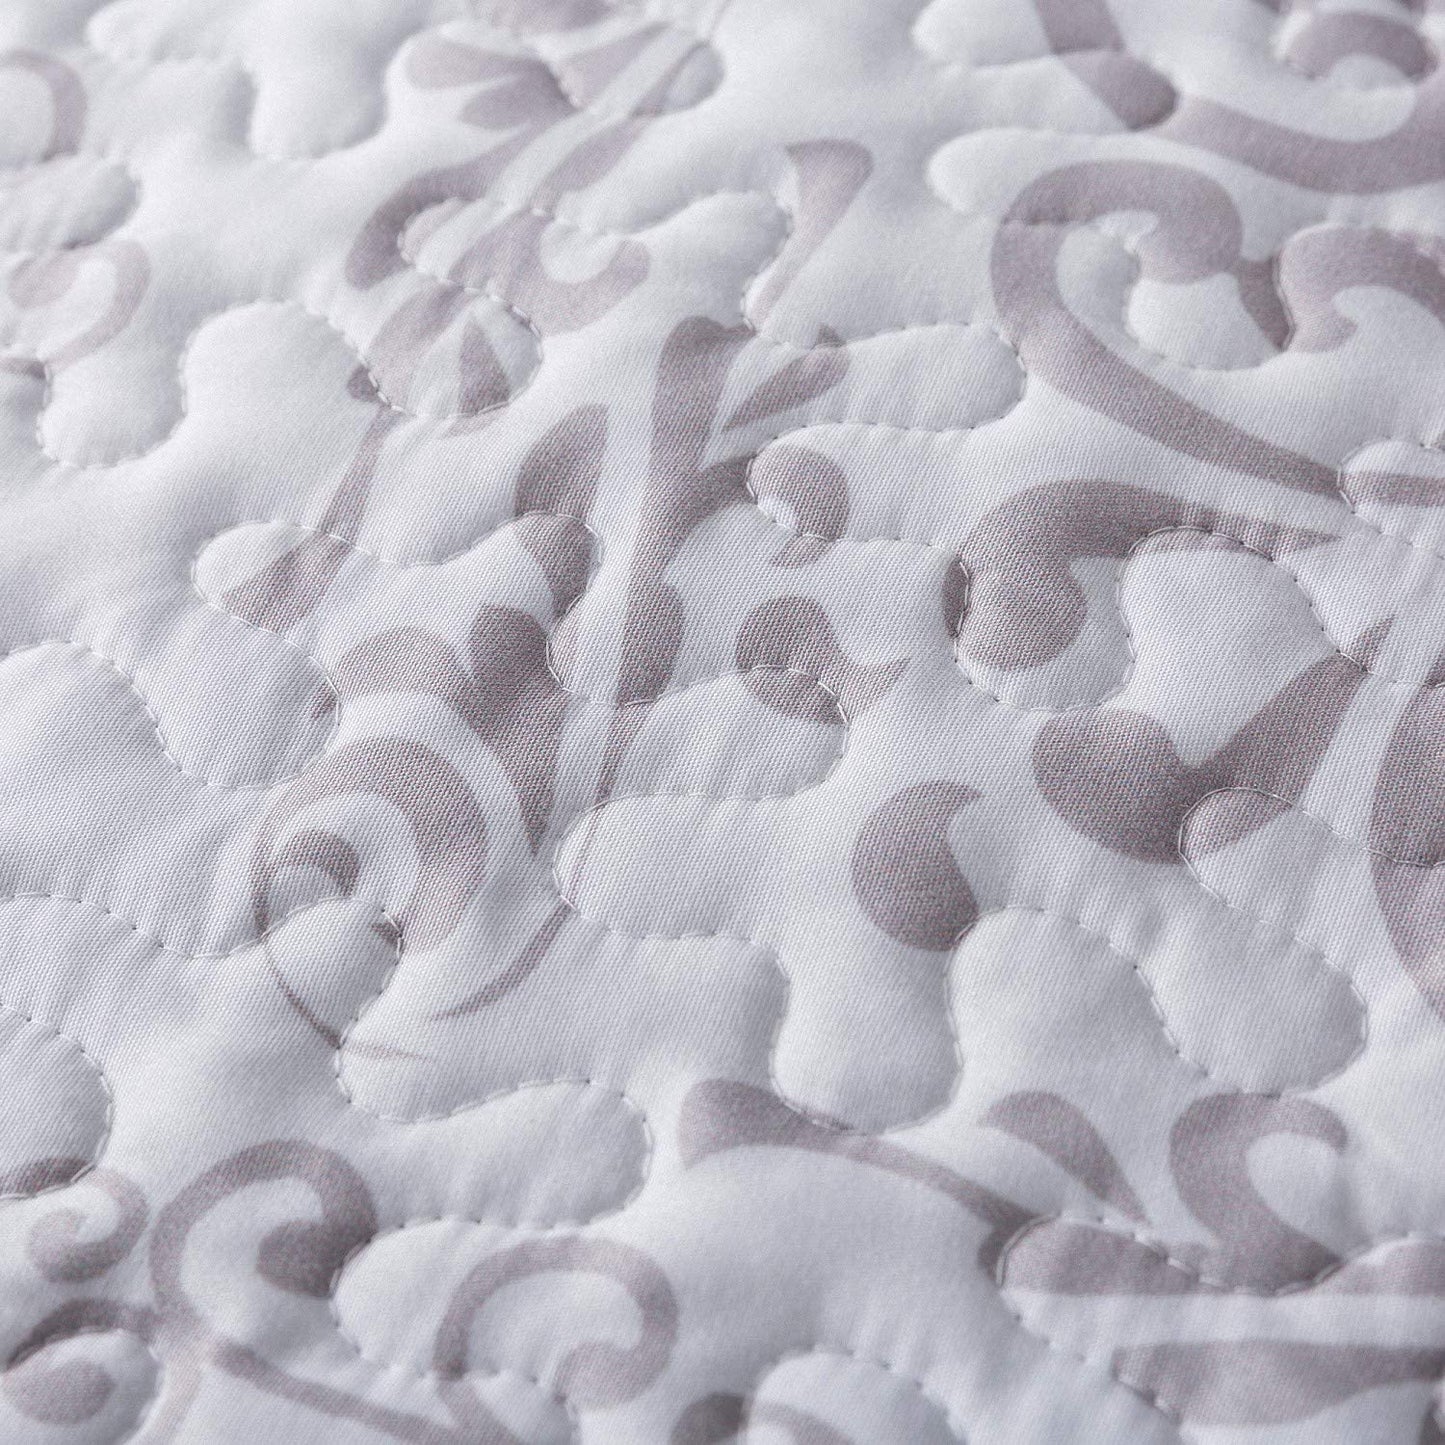 Microfiber Reversible Quilt, Sham in Painted Floral Vase Pattern